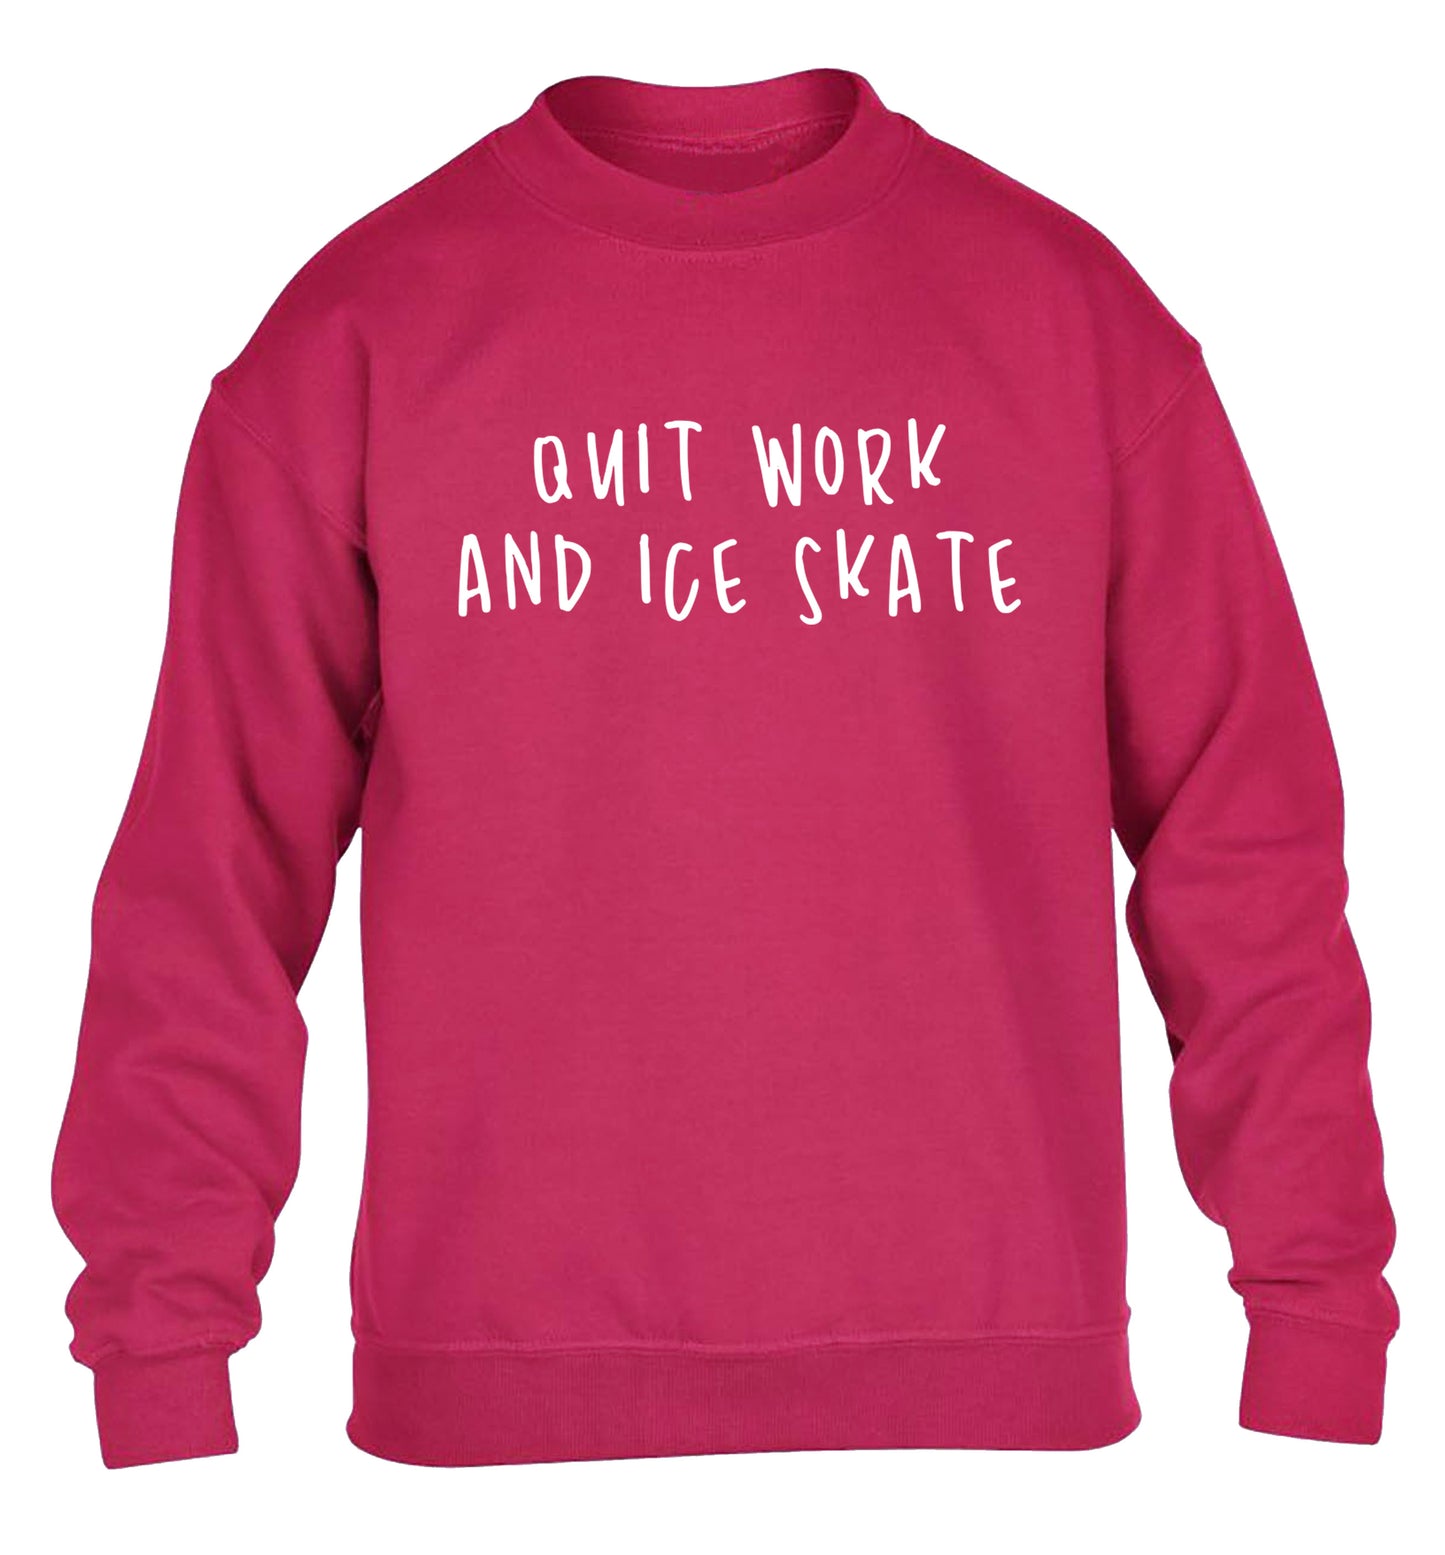 Quit work ice skate children's pink sweater 12-14 Years